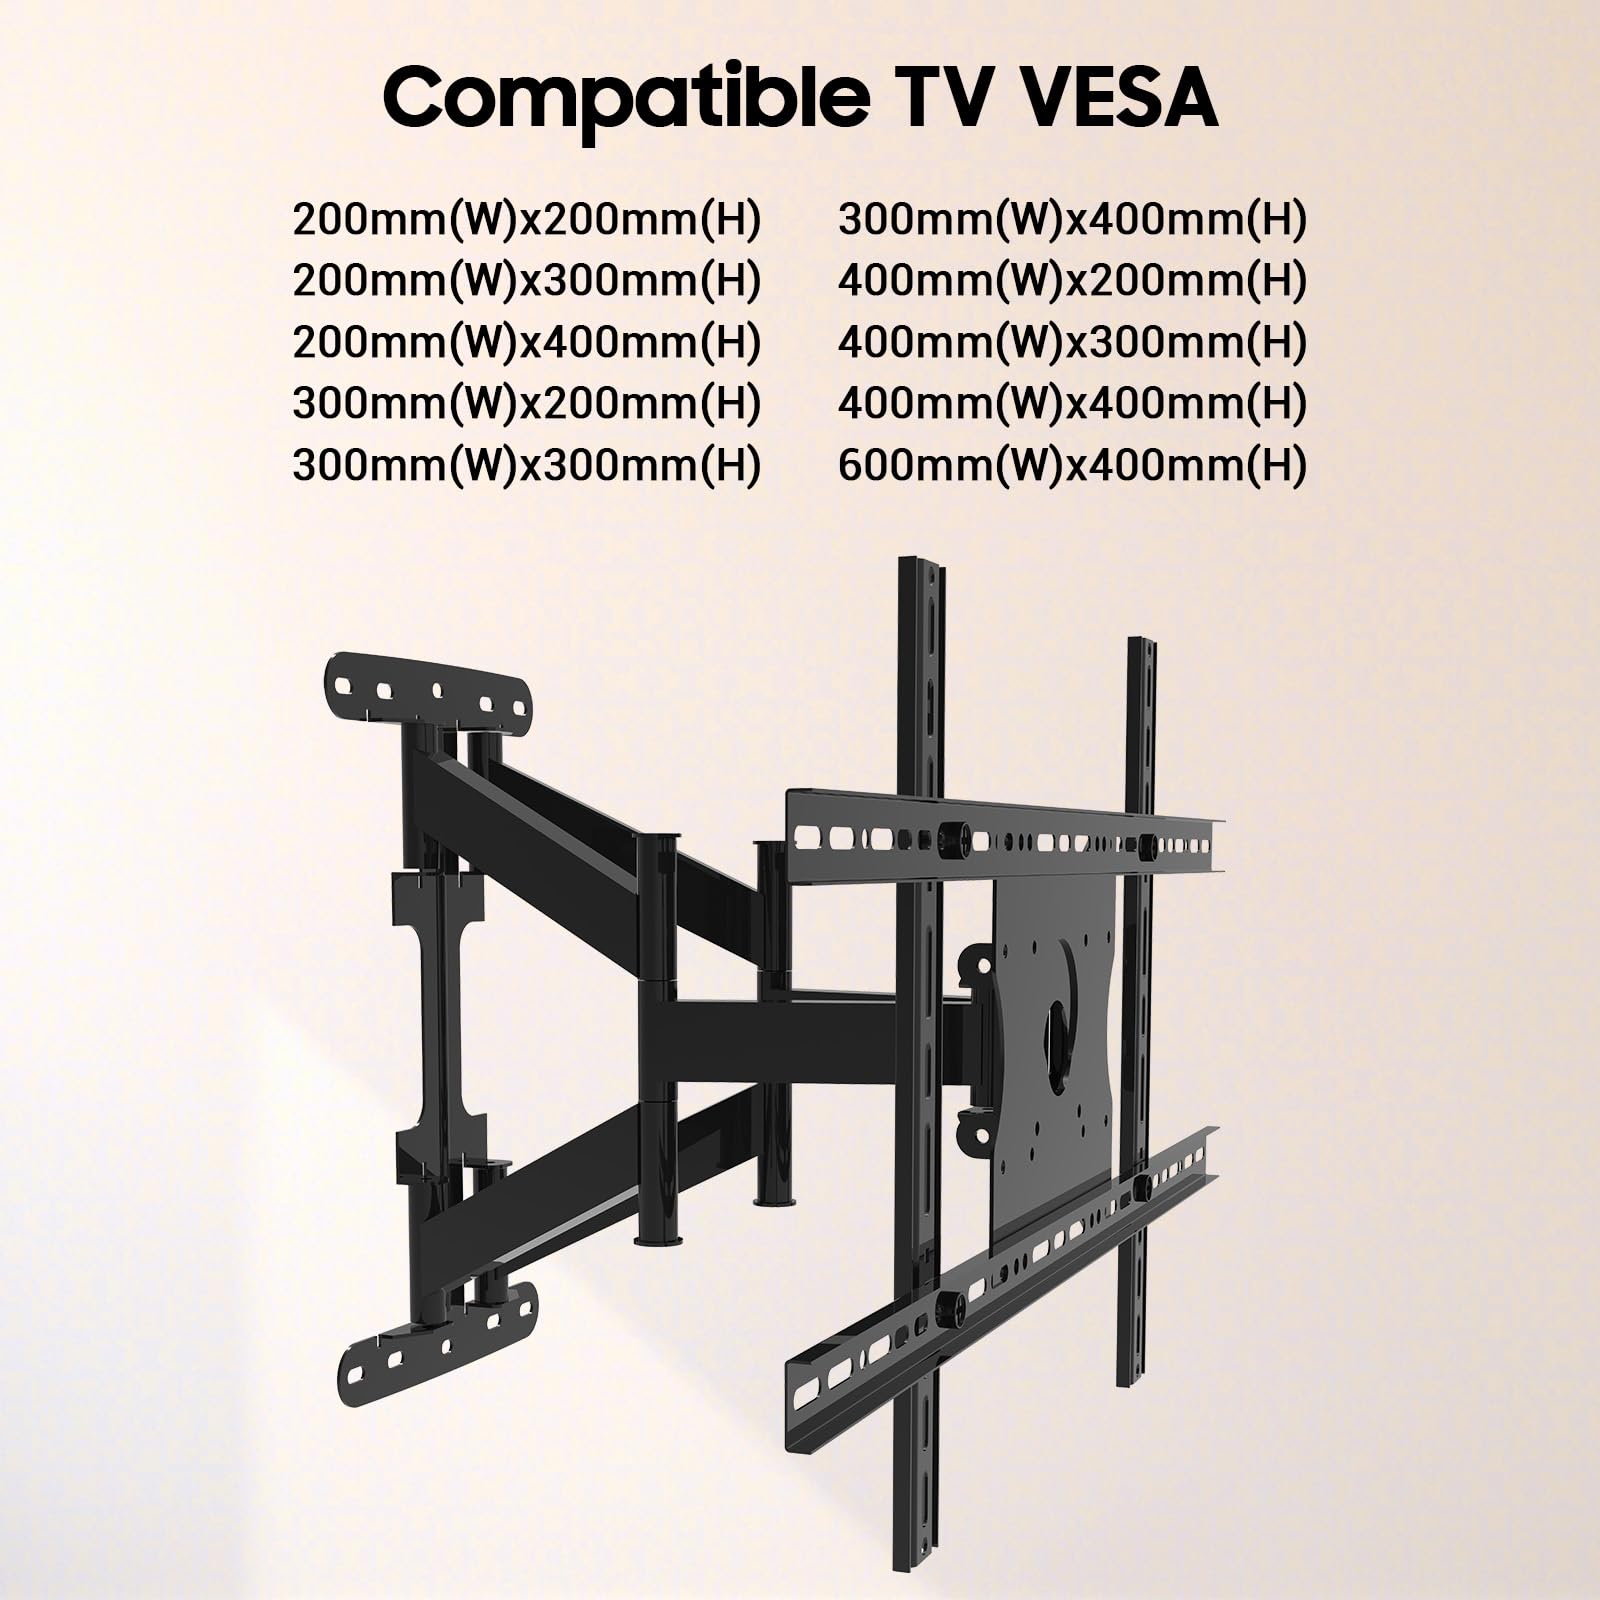 SYLVOX Adjustable TV Wall Mount, Max VESA 700x400mm up to100 lbs / 45 kg